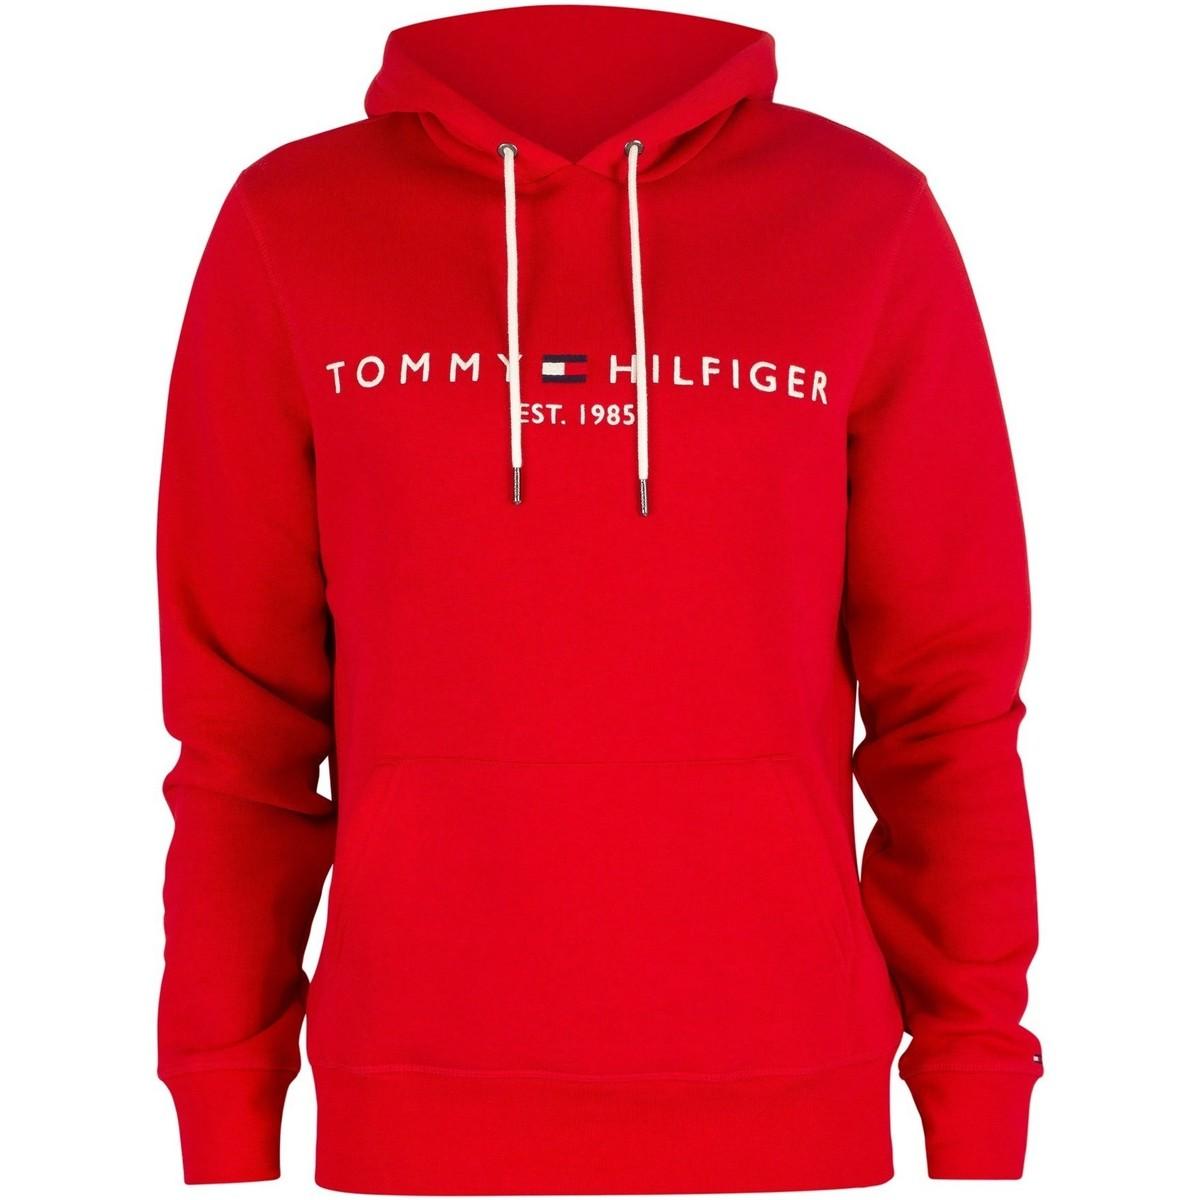 tommy red sweatshirt, Off 60%, www.scrimaglio.com